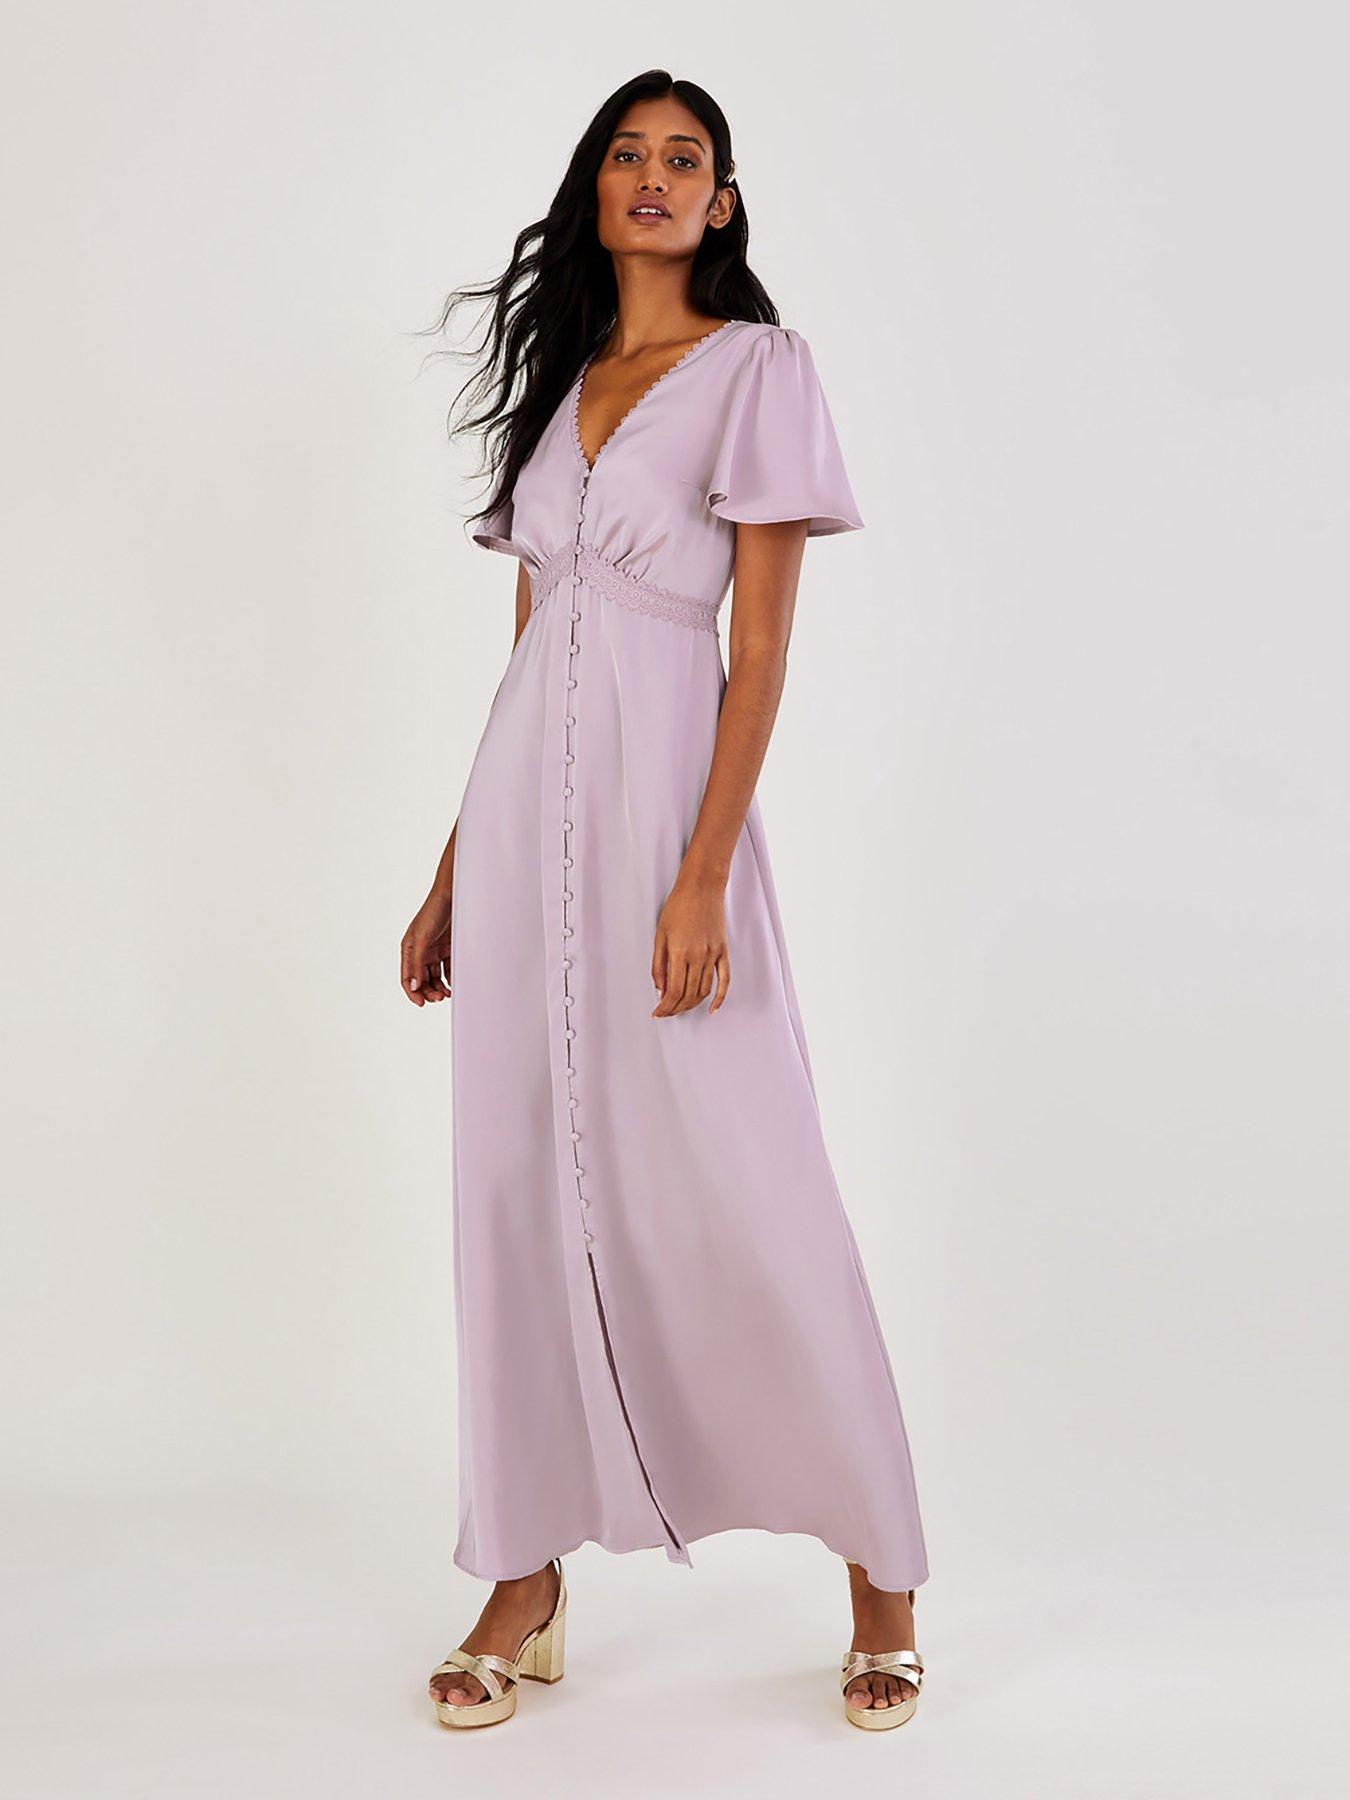 Statement Maker Pink Floral Tiered Maxi Dress – Ivy & Olive Boutique